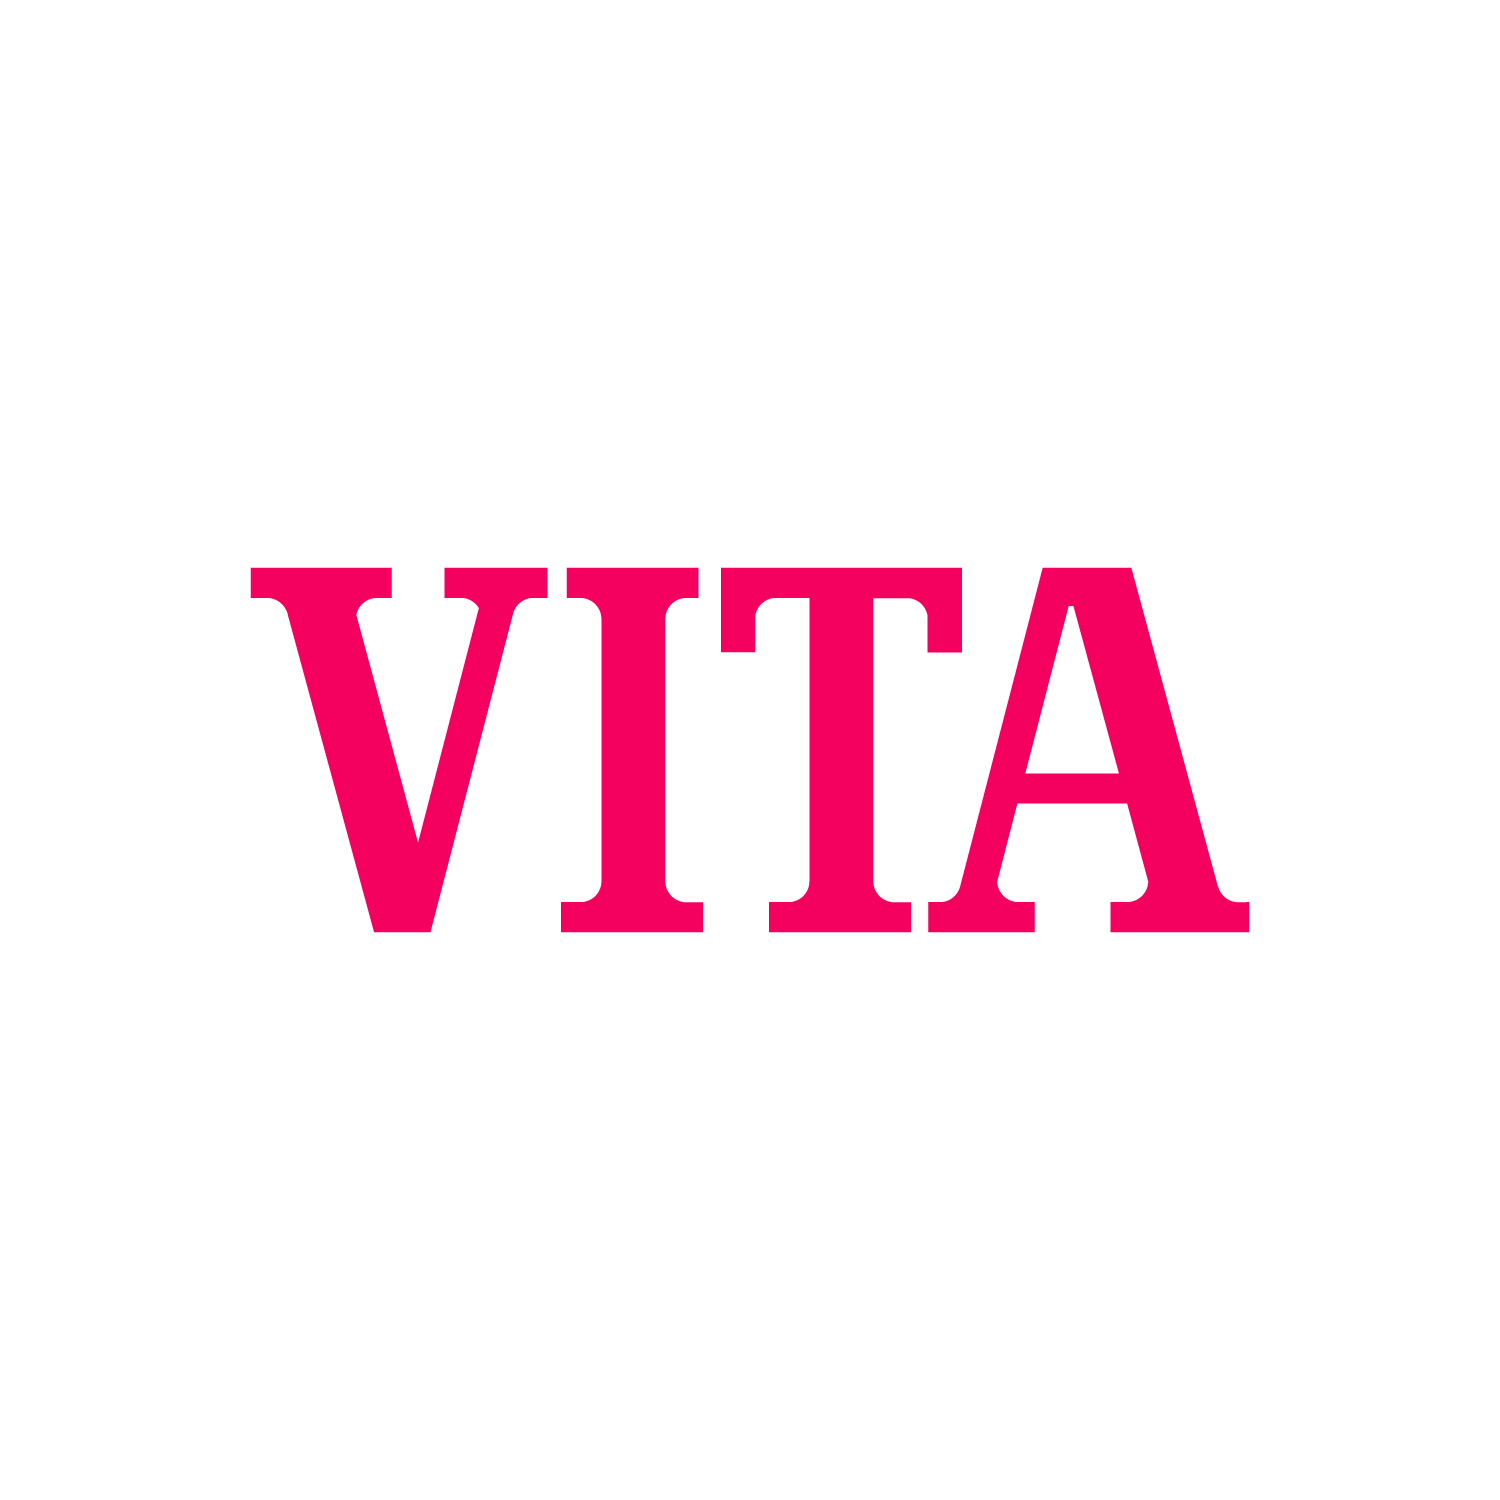 Фирма VITA: Прогресс в протезировании!